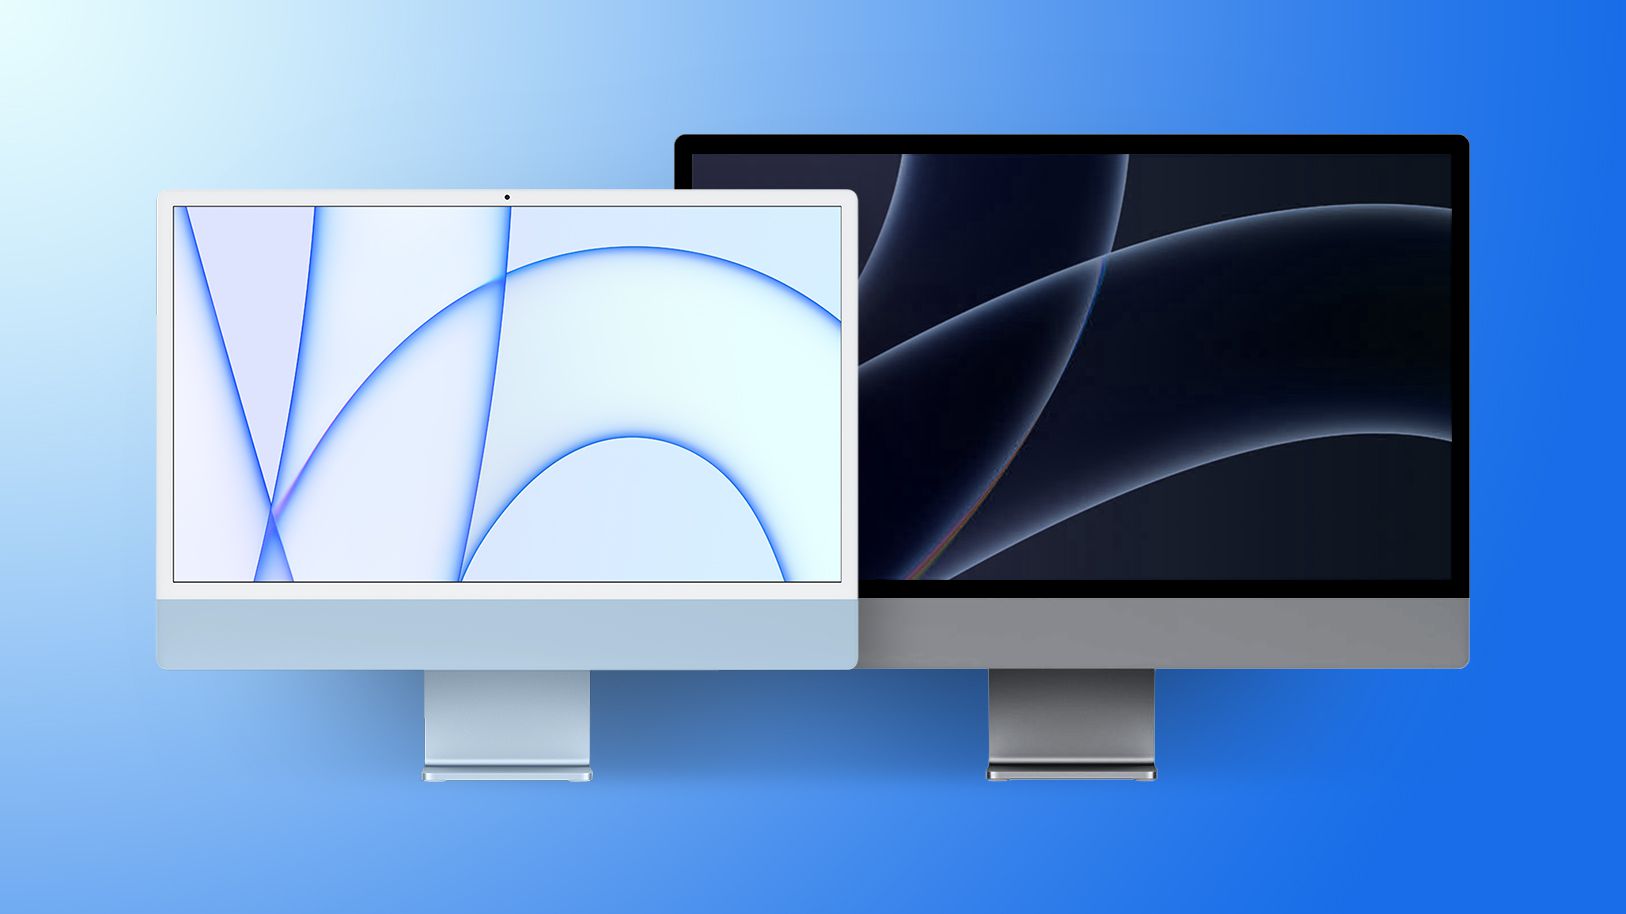 Gurman: Apple Still Working on ‘Pro’ iMac With Larger Screen